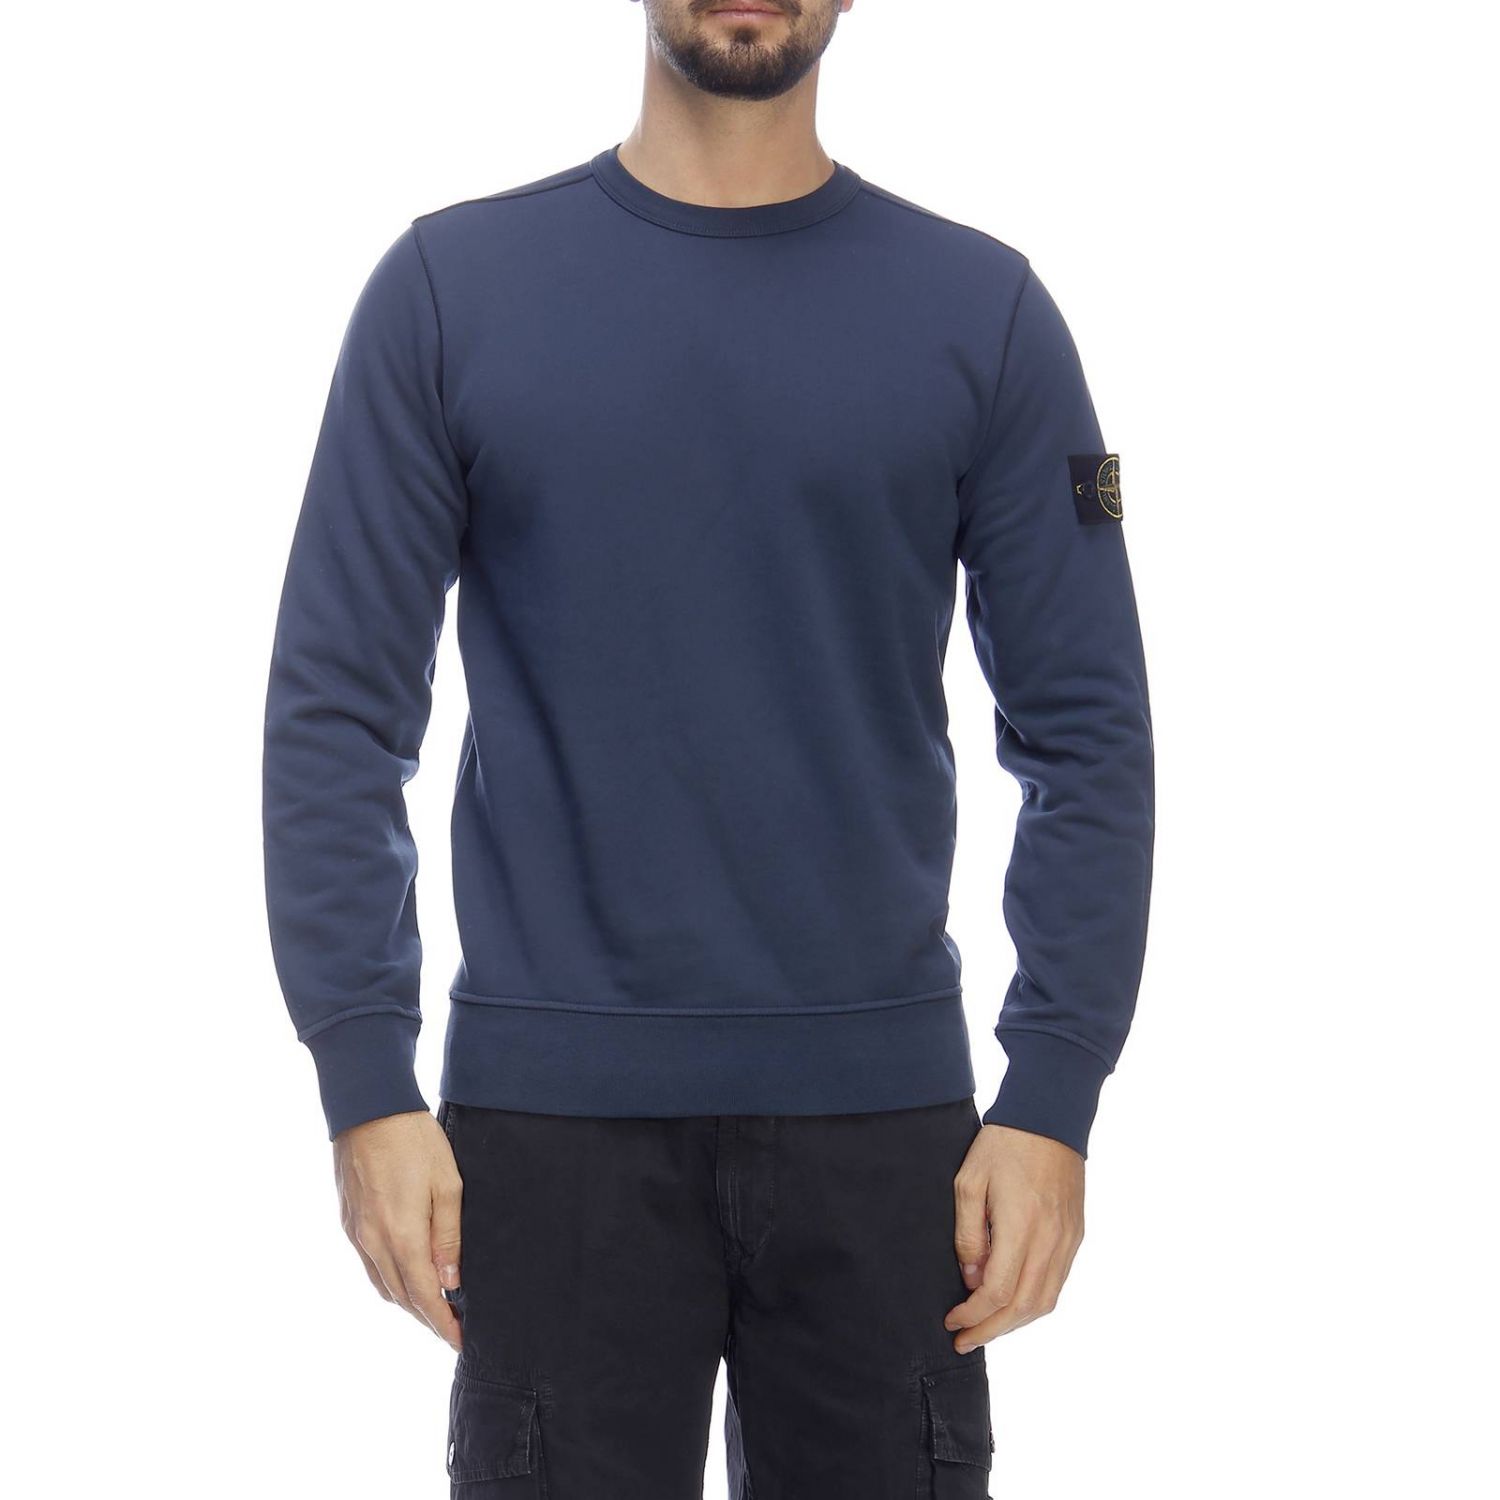 STONE ISLAND: sweater for man - Blue | Stone Island sweater 62751 ...